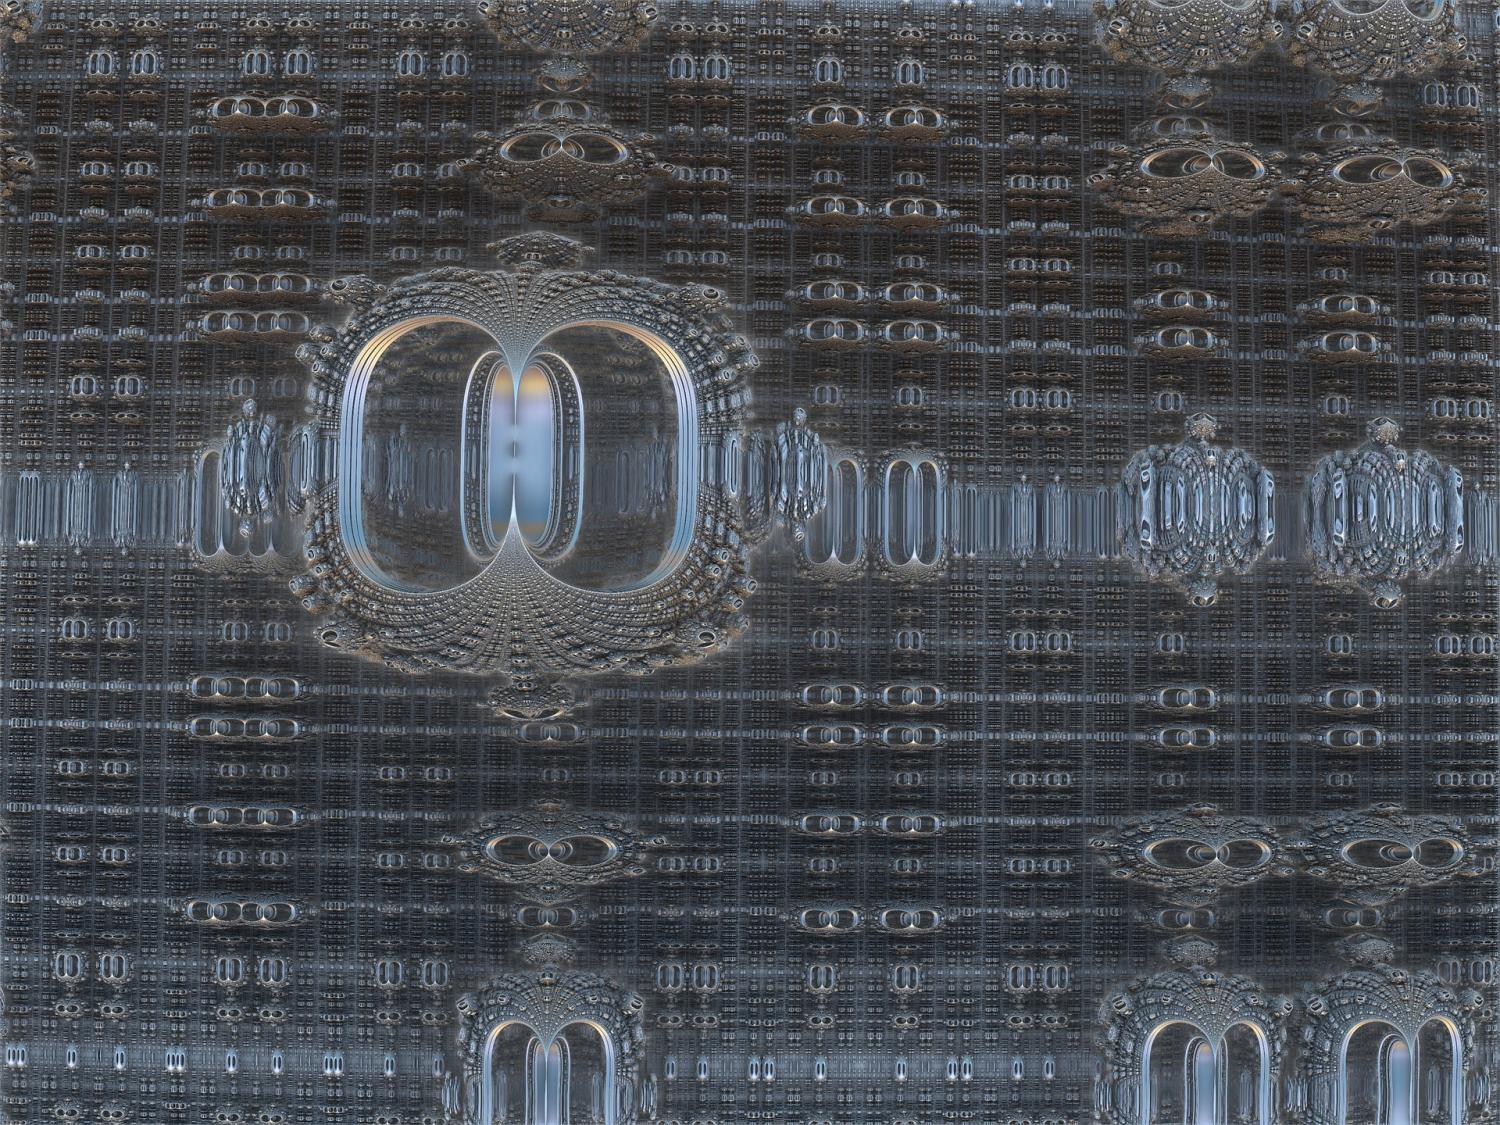 Researchers propose a simpler design for quantum computers